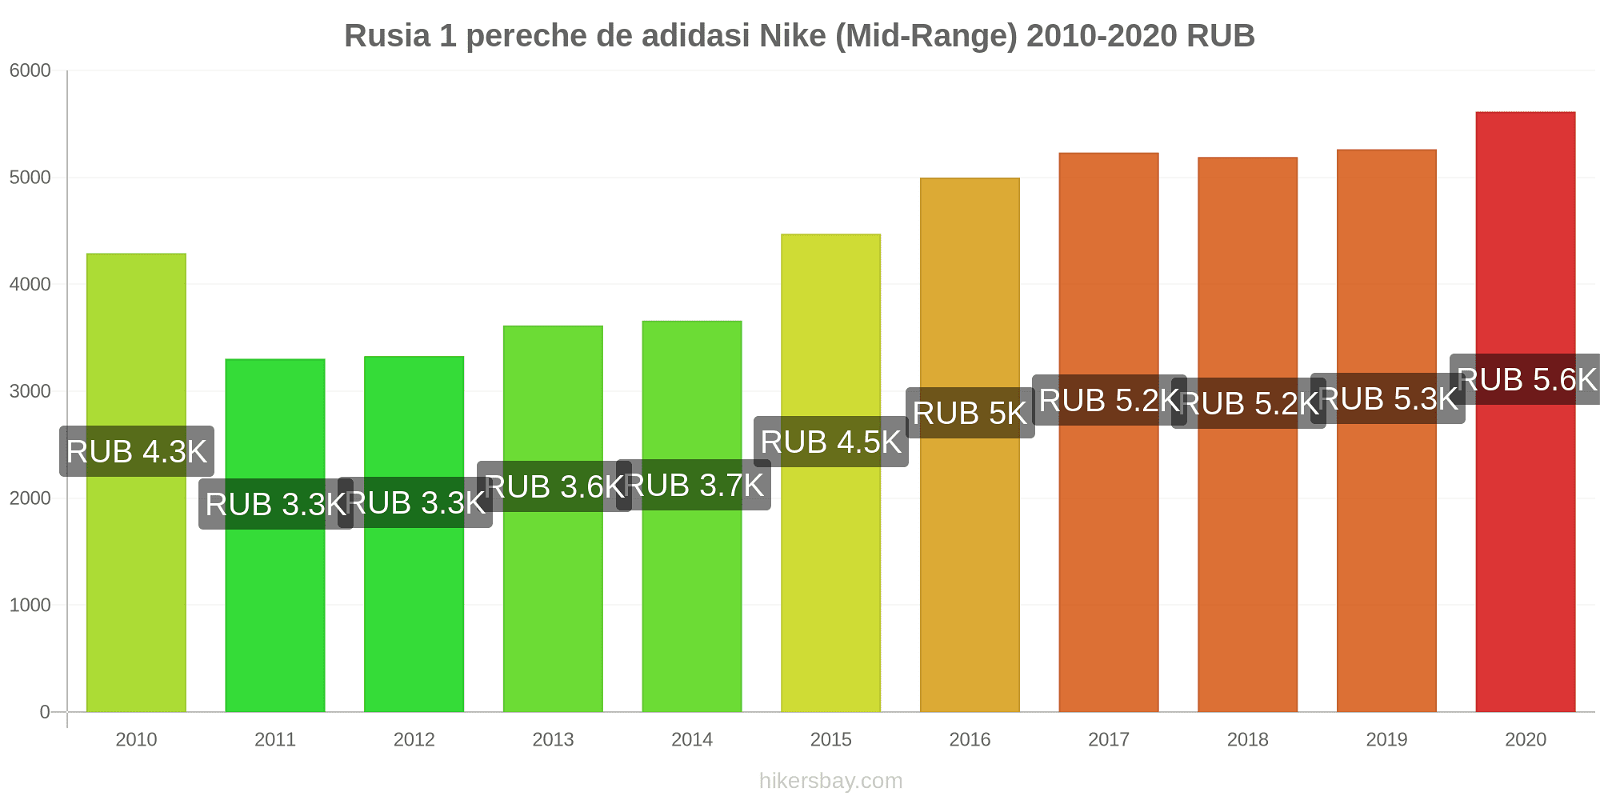 Rusia modificări de preț 1 pereche de adidasi Nike (Mid-Range) hikersbay.com